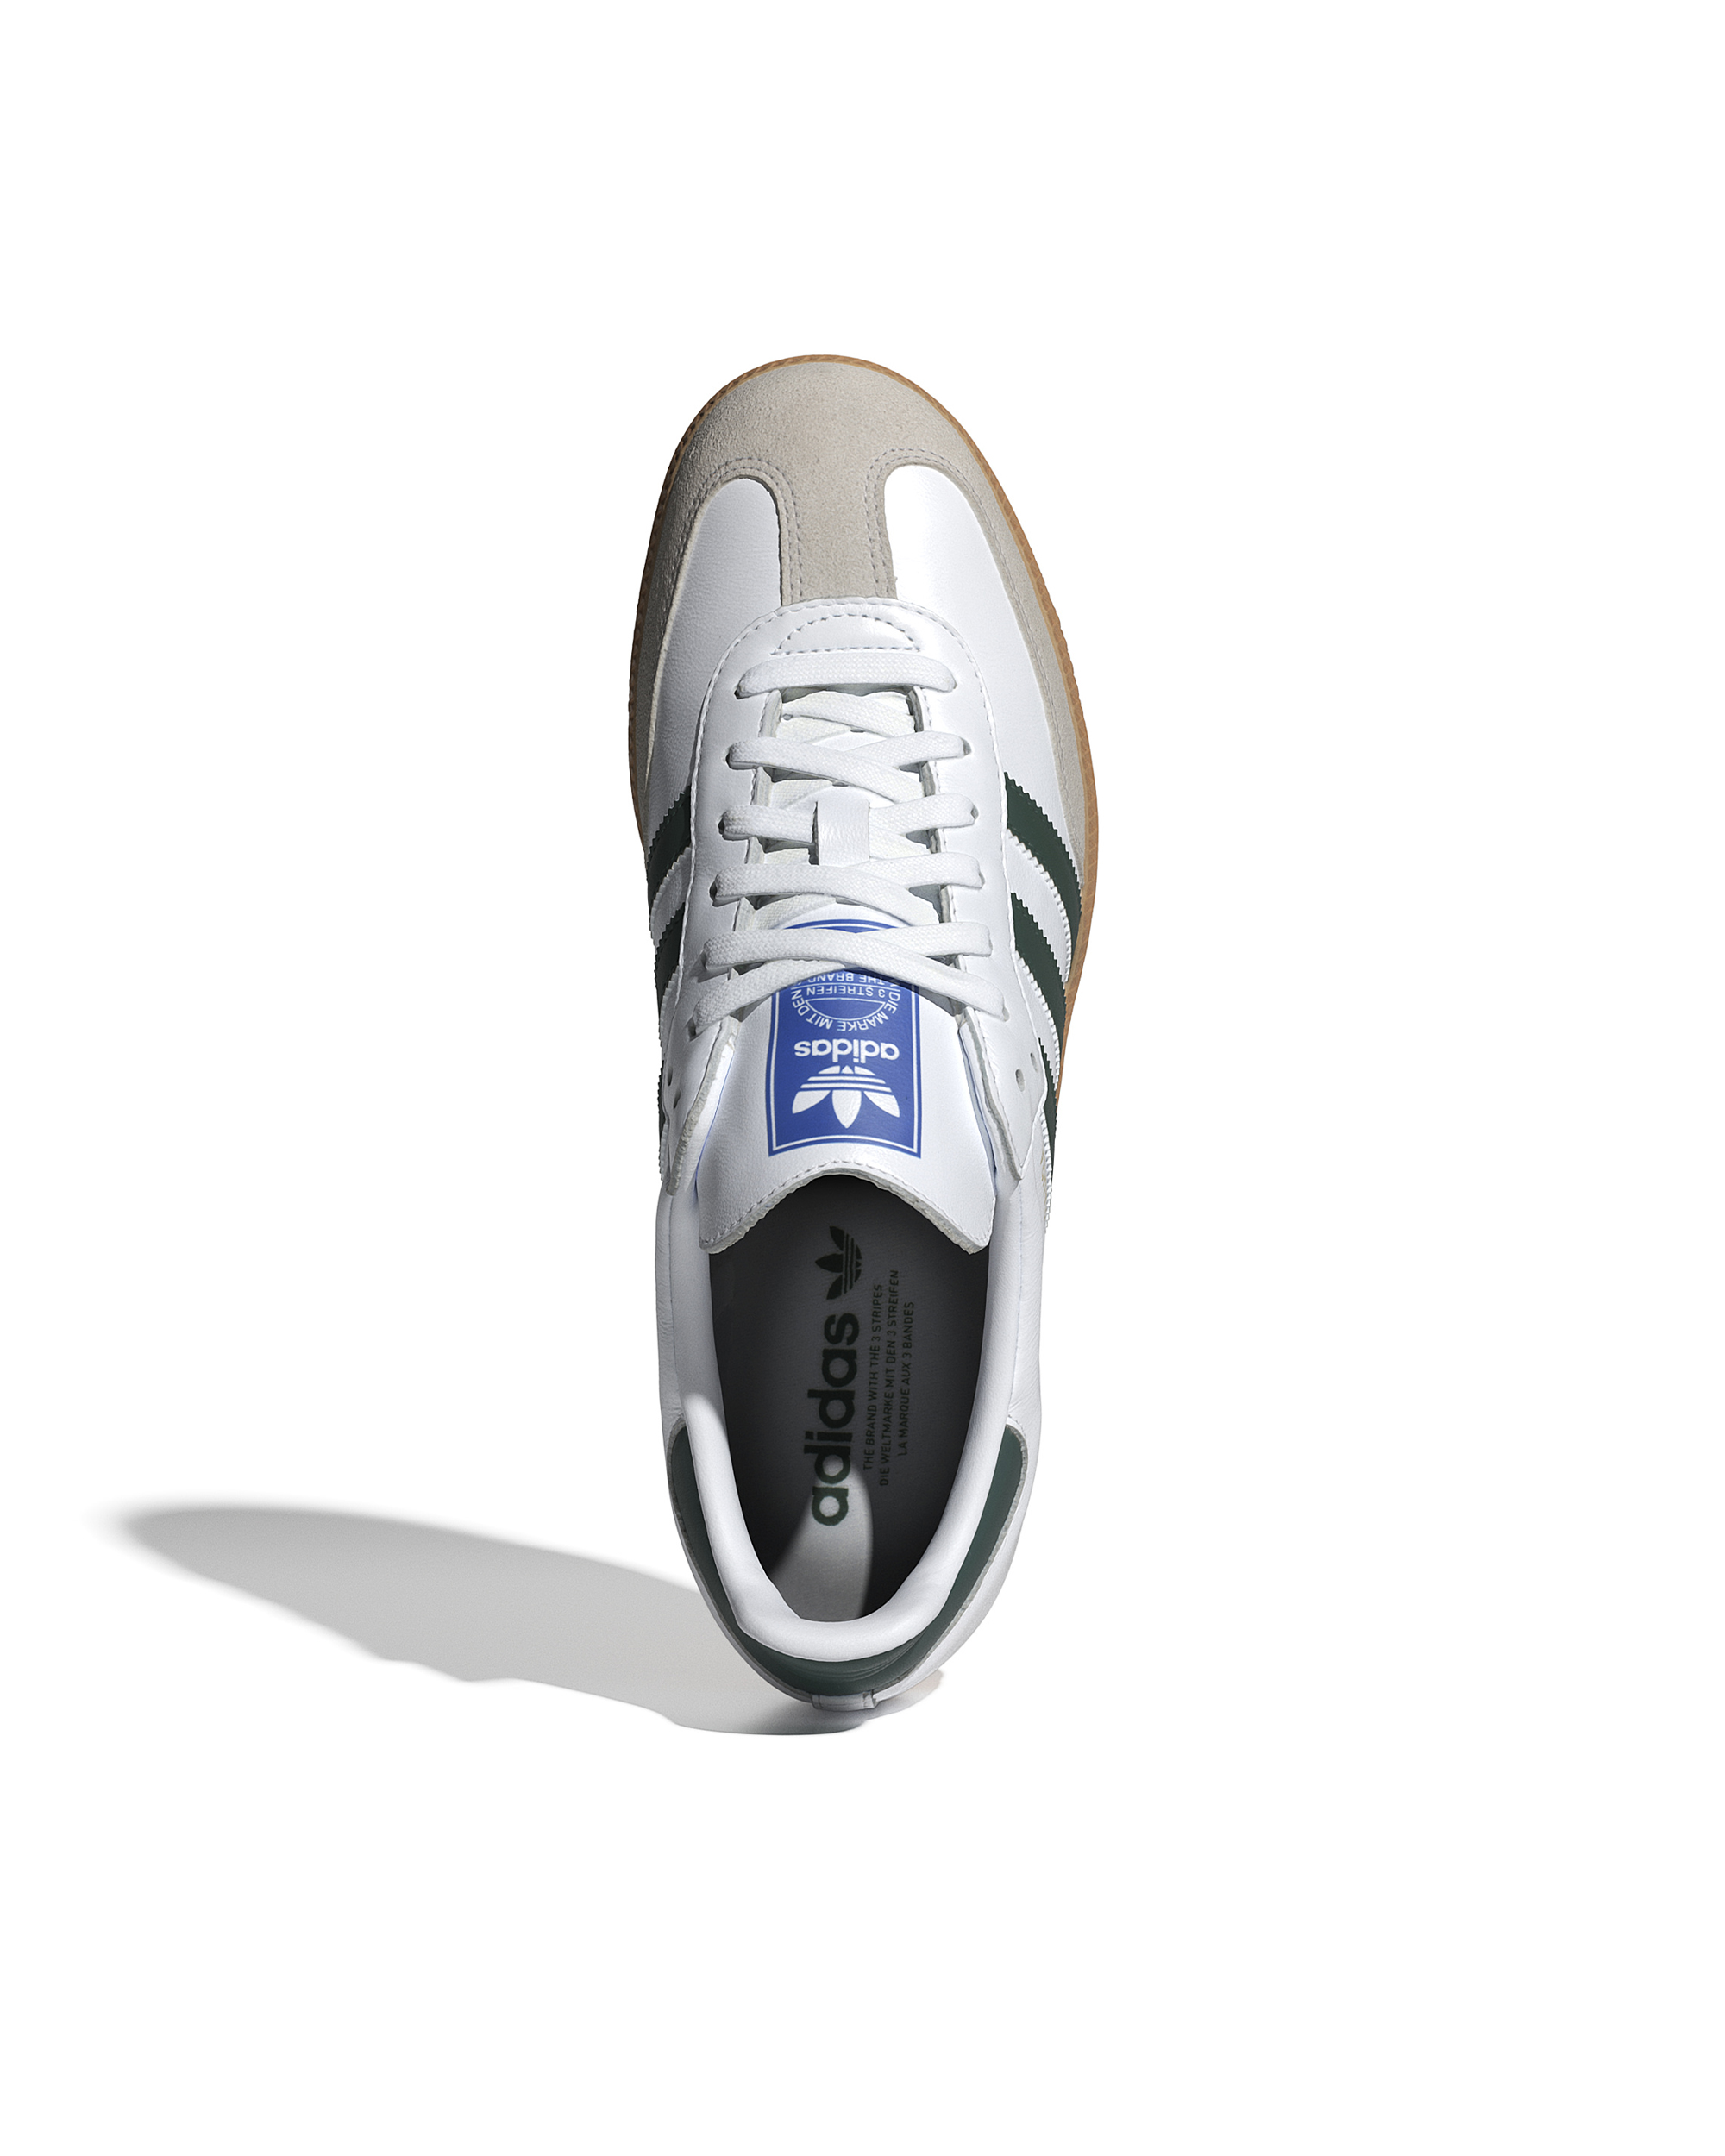 Shop Adidas Originals Sneaker Samba Og Cloud White / Collegiate Green / Gum In Ftwwht/cgreen/gum3